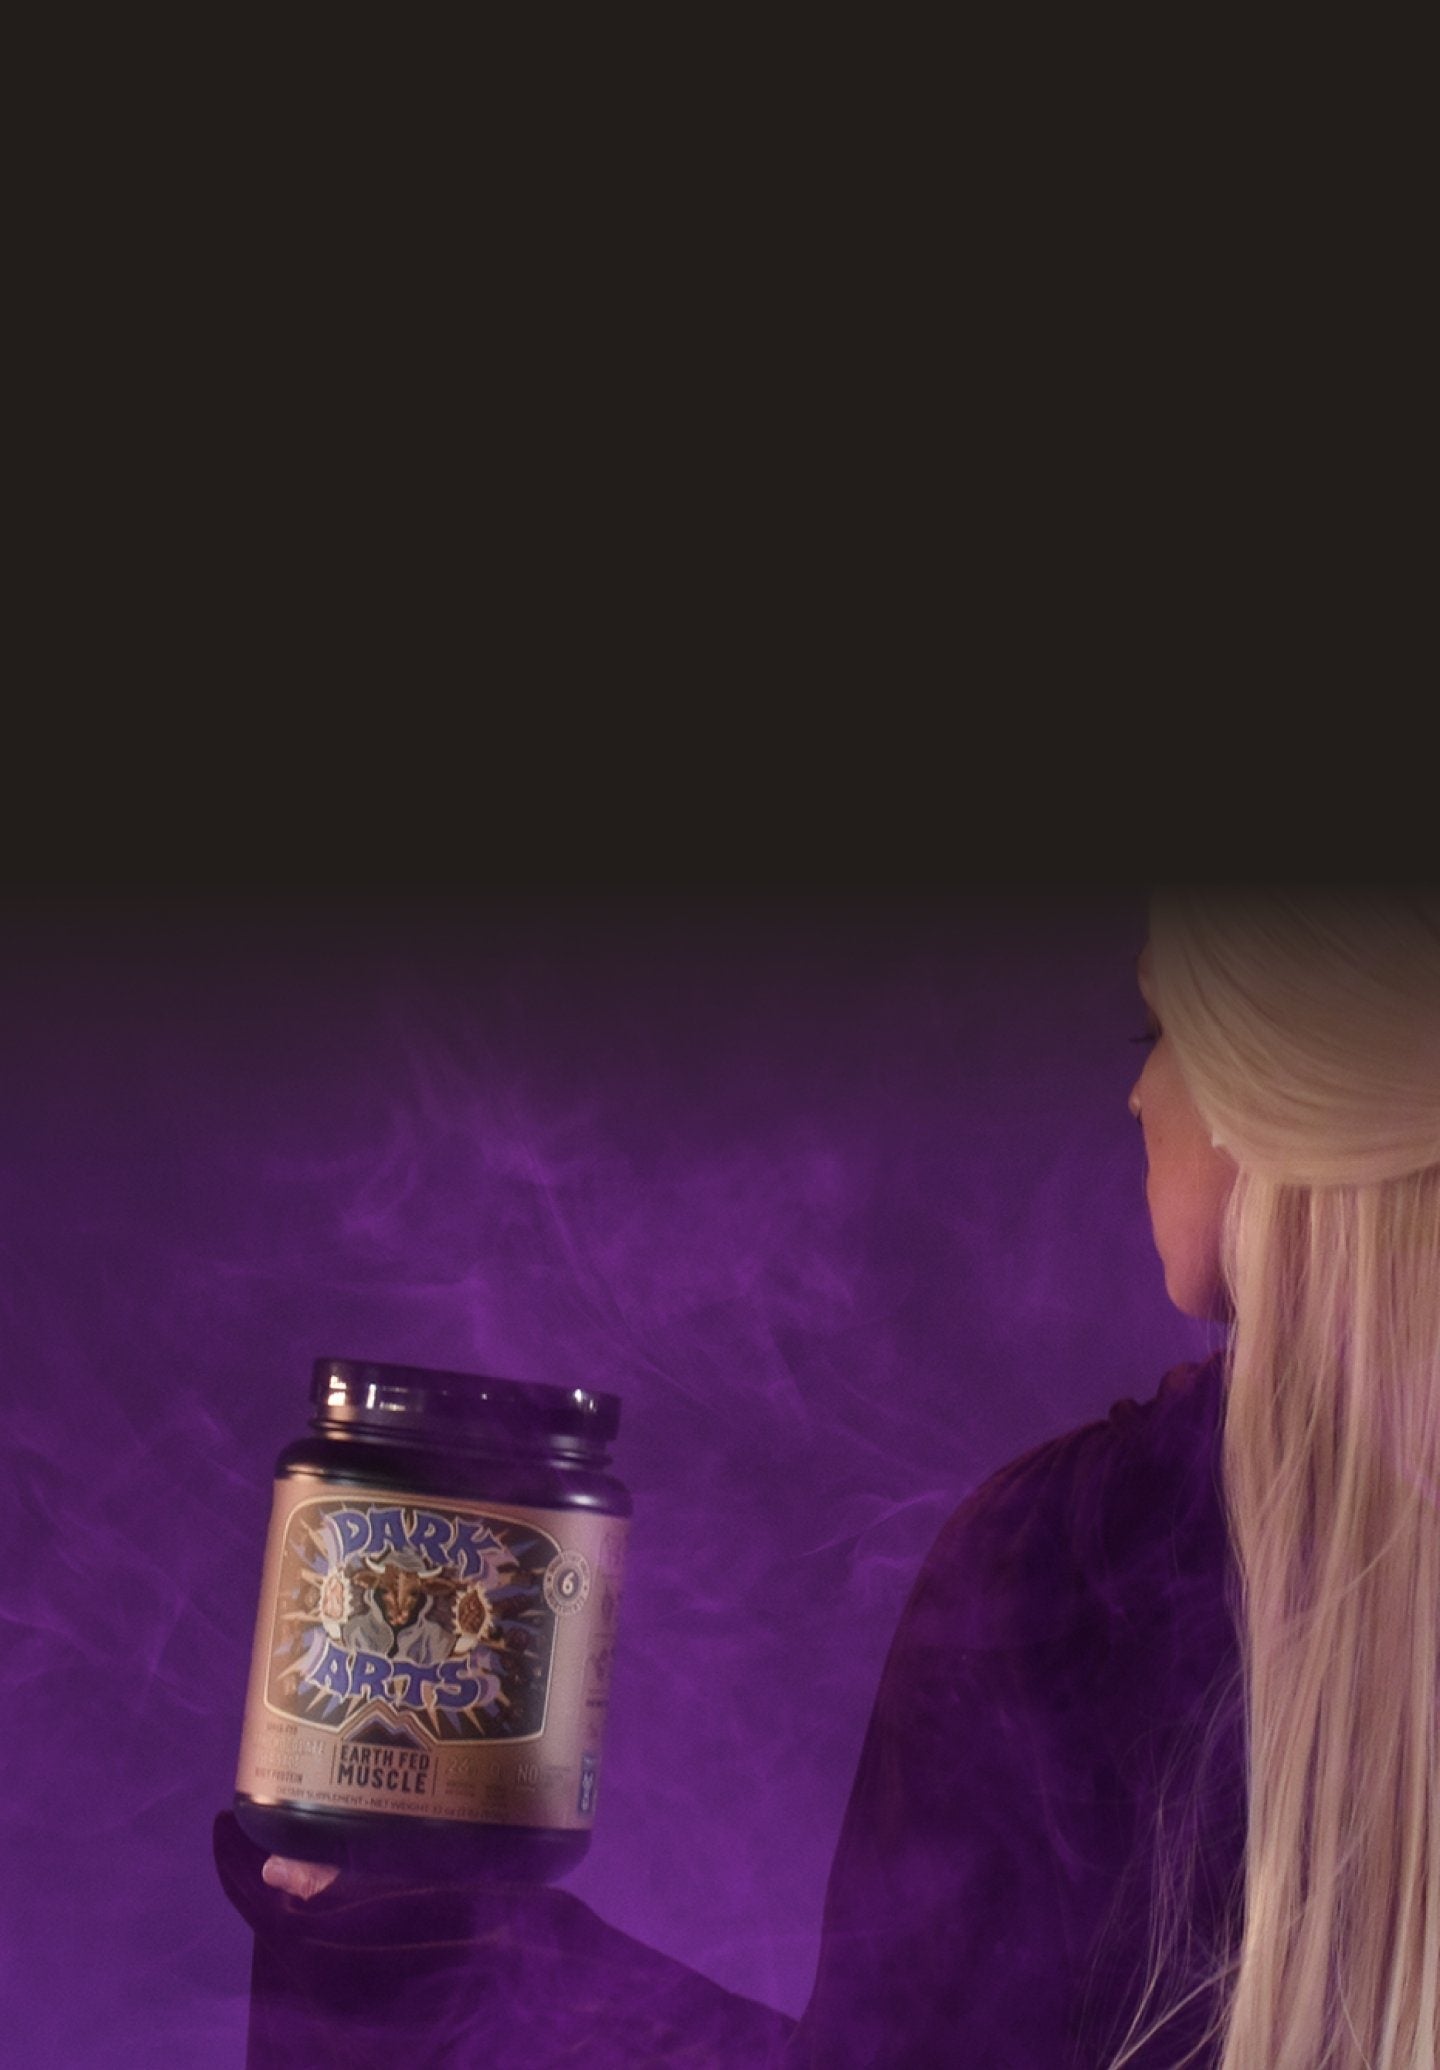 Woman holding Dark Arts salted chocolate grass-fed whey protein powder on purple background, portrait orientation